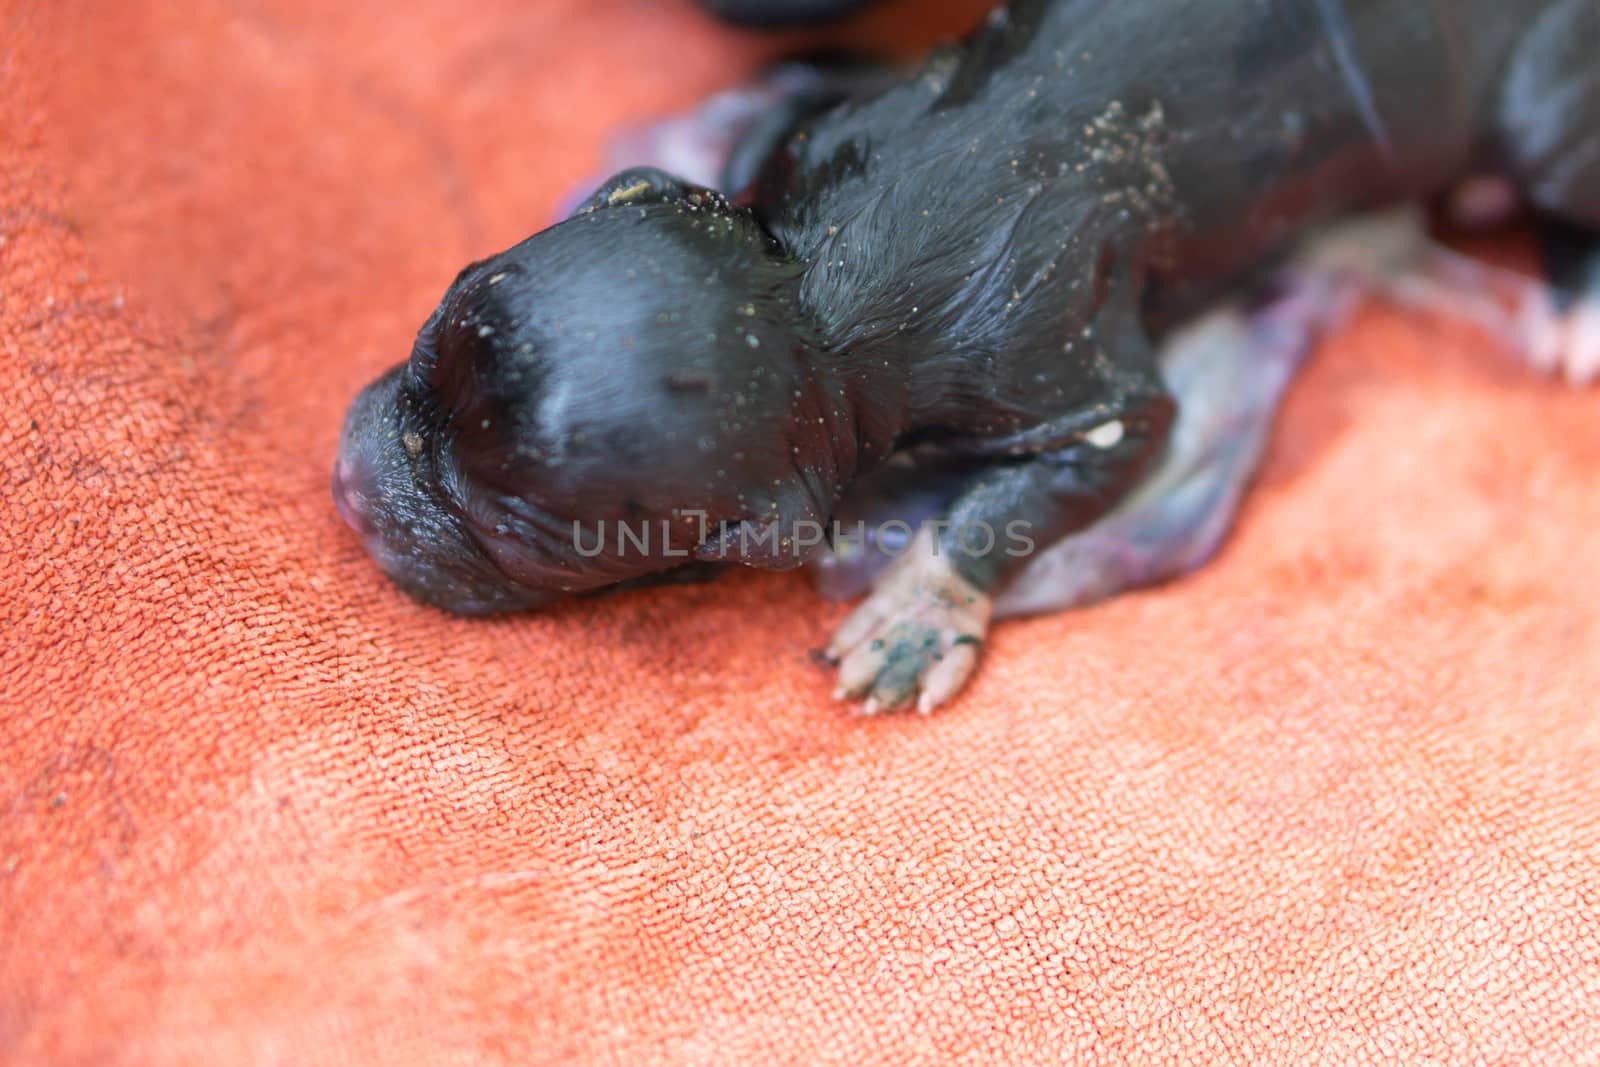 Closeup new born puppy black color with placenta on orange cloth by pt.pongsak@gmail.com